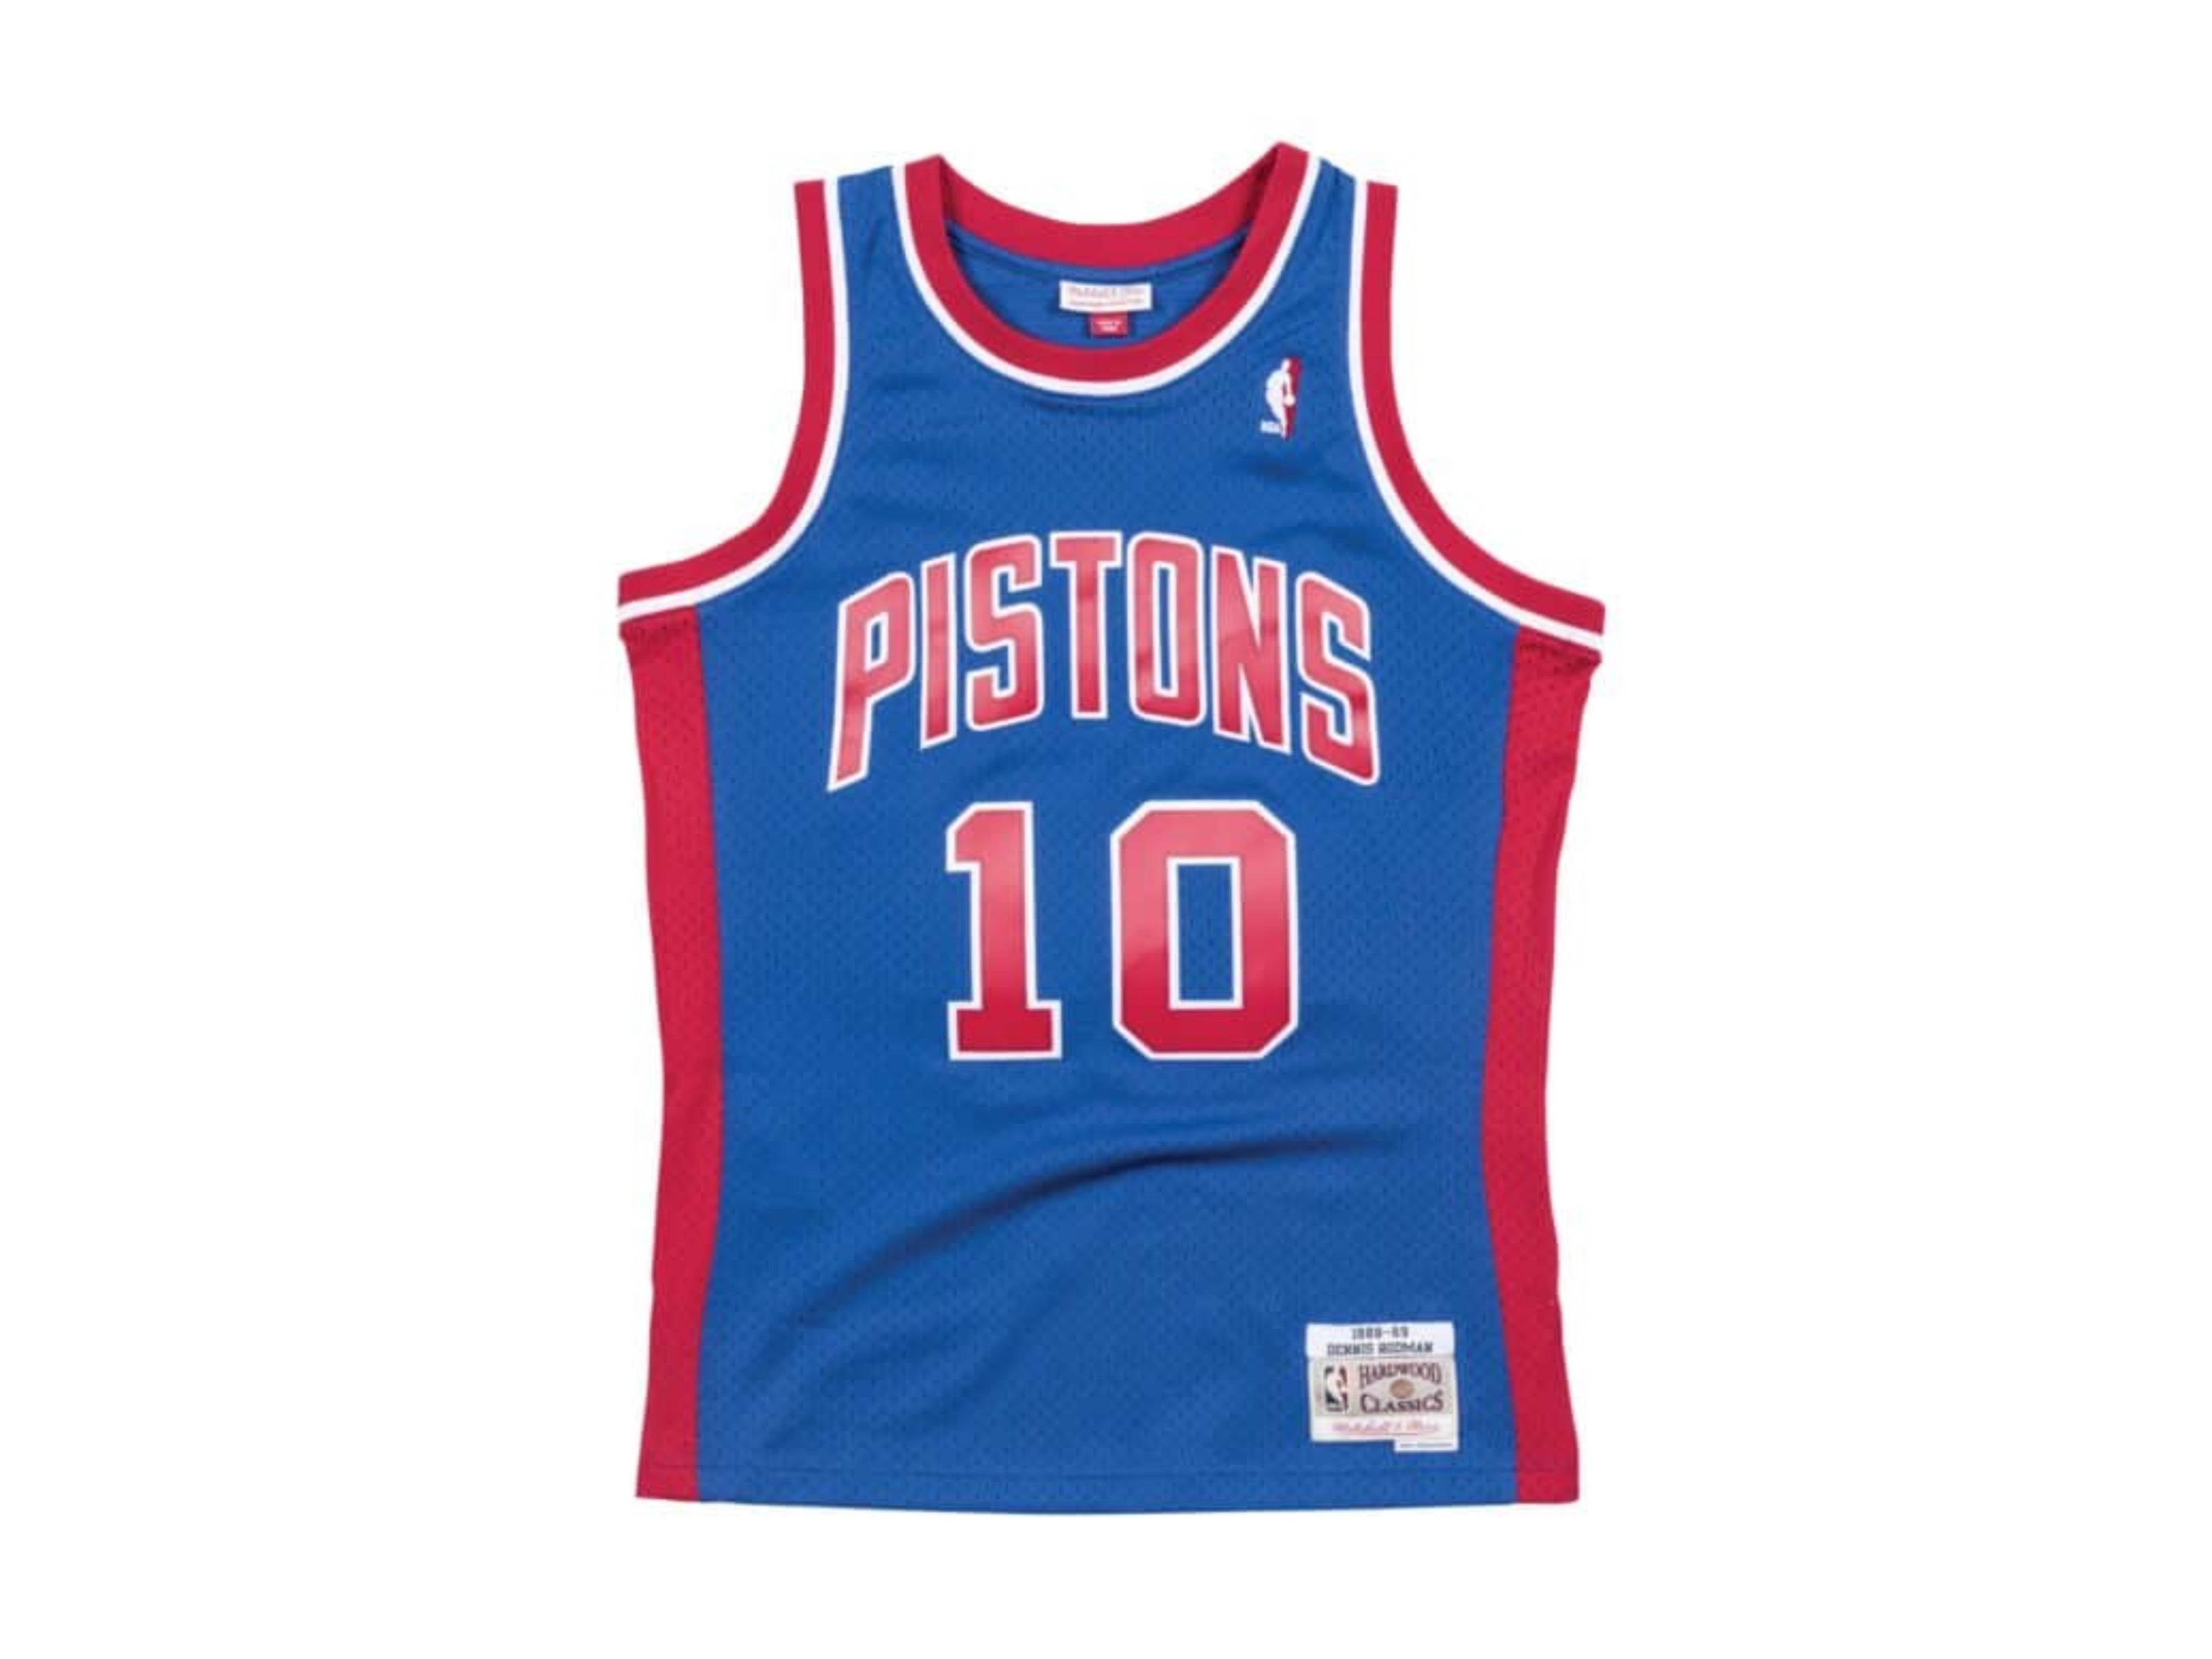 Allen Iverson Detroit Pistons Mitchell & Ness Hardwood Classics Swingman  Jersey - Red